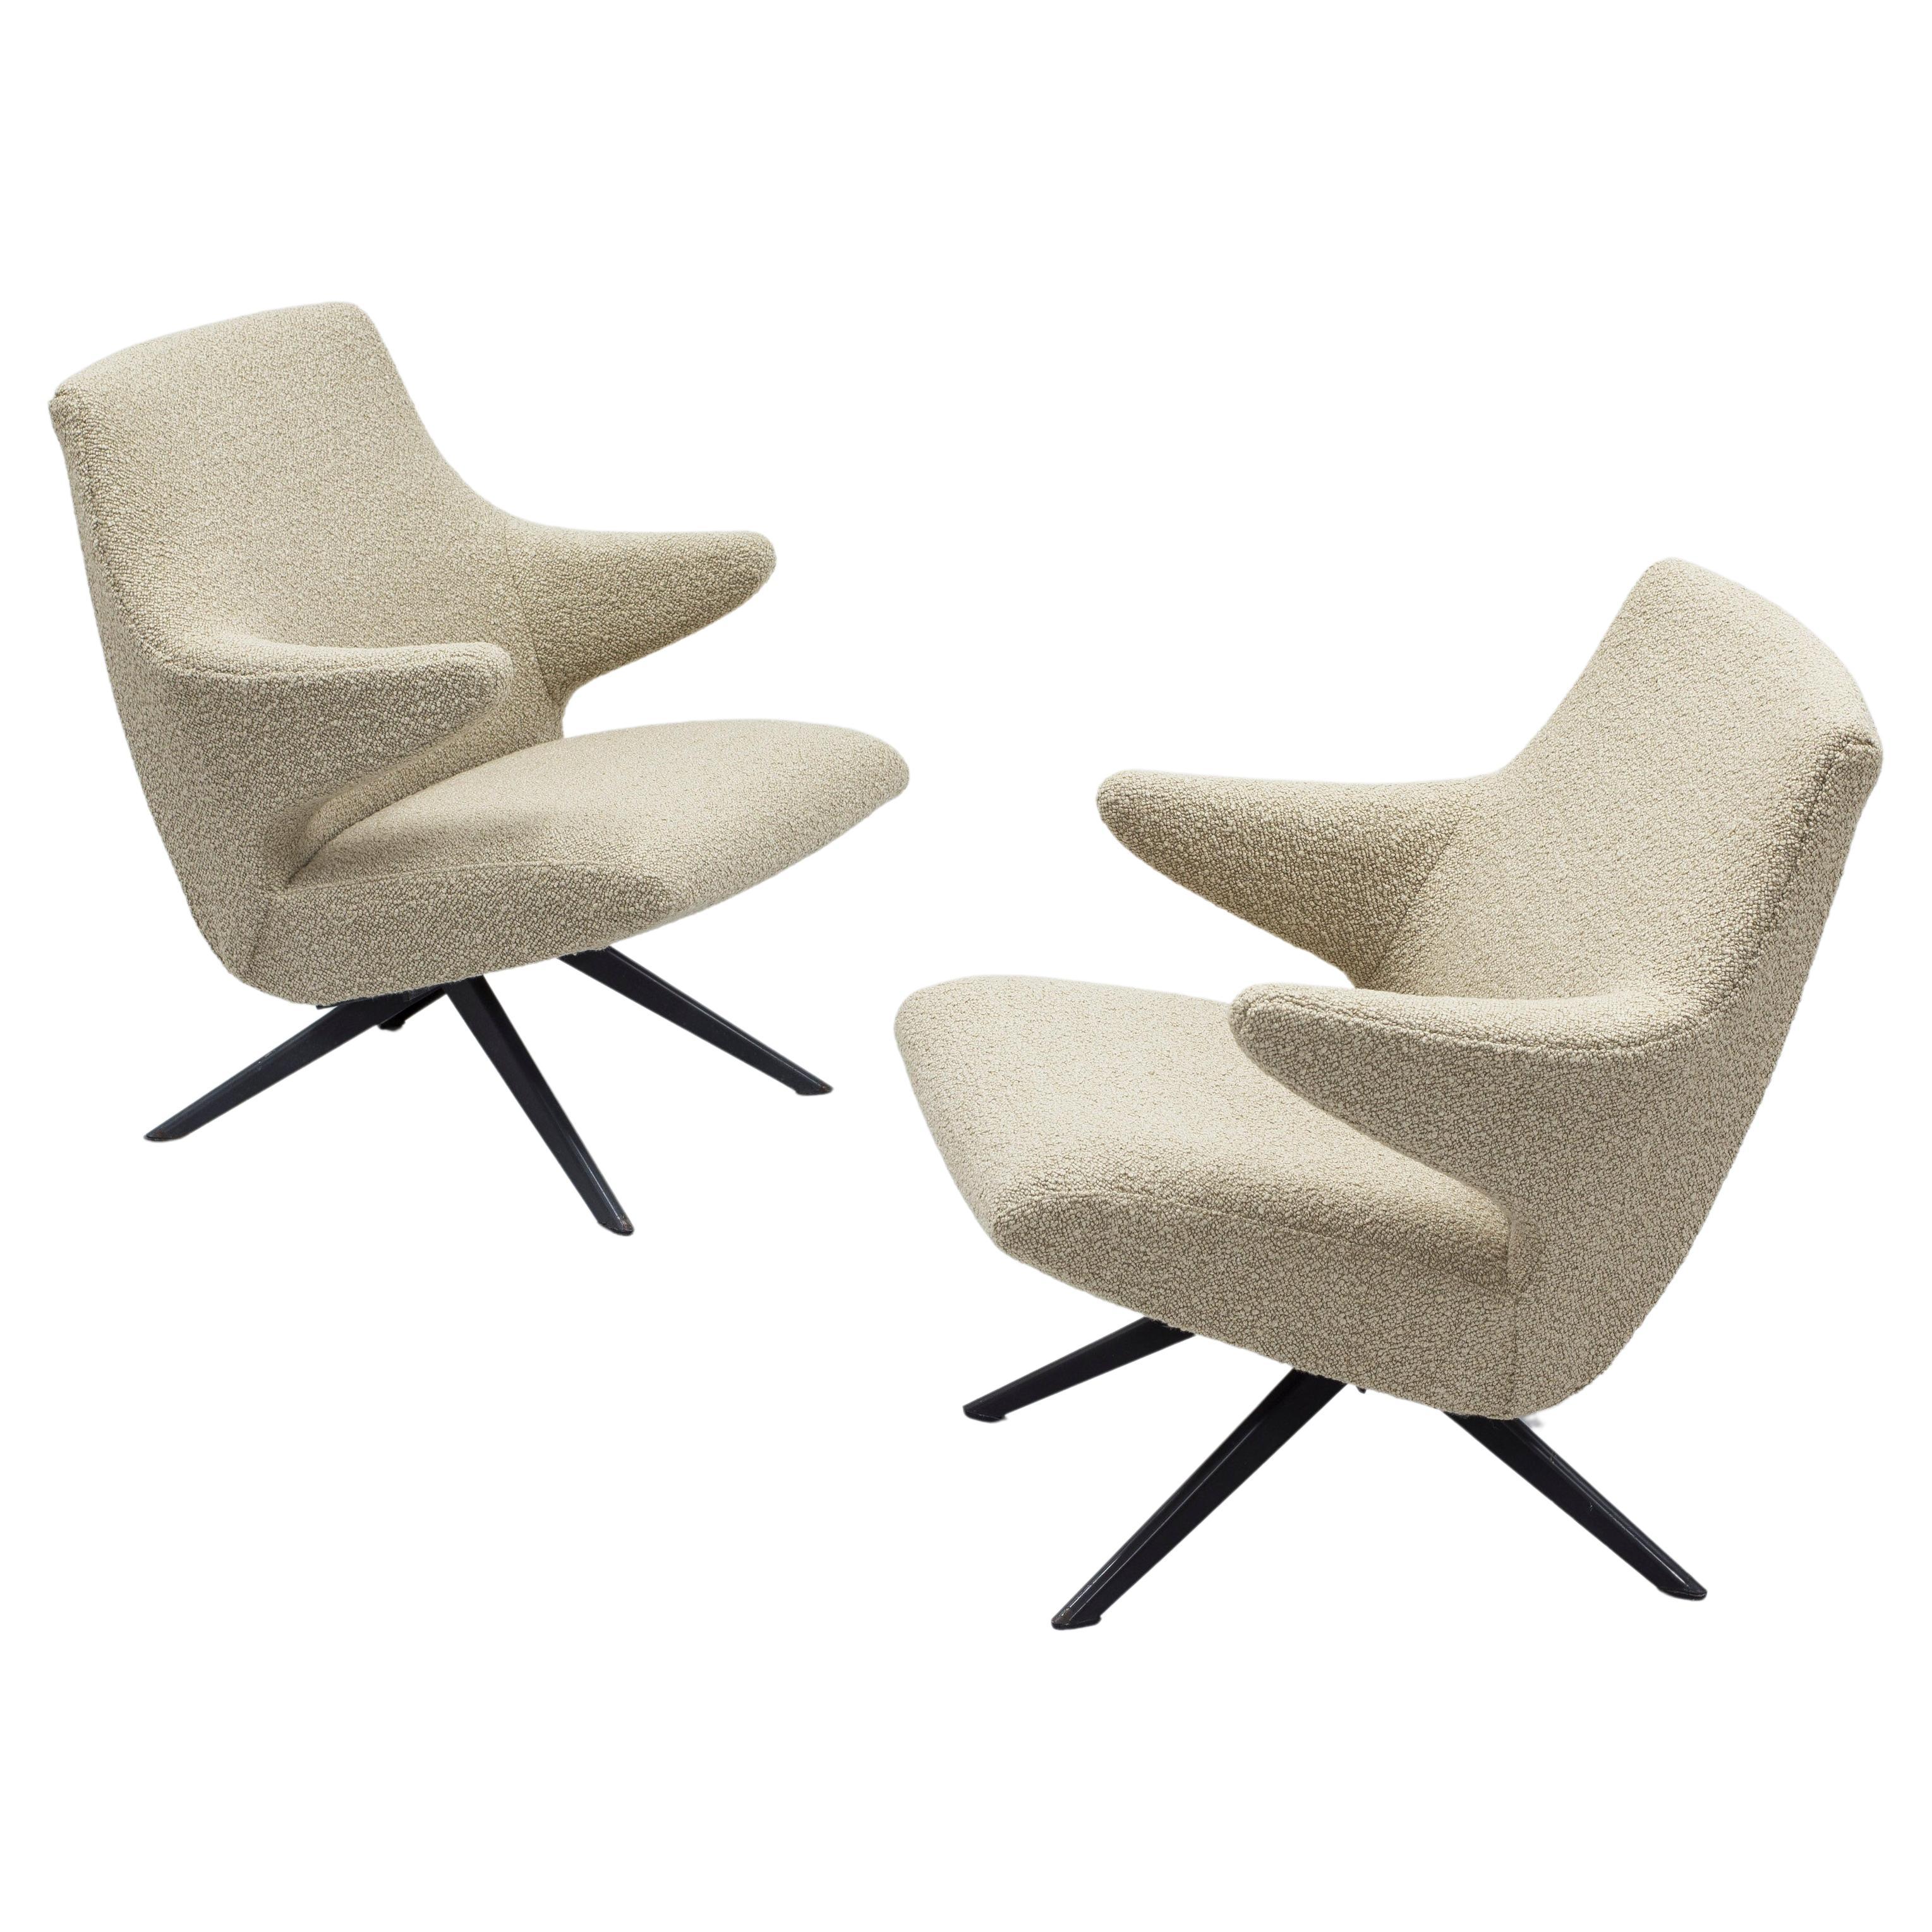 Pair of lounge chairs designed by Bengt Ruda by Nordiska Kompaniet, 1950